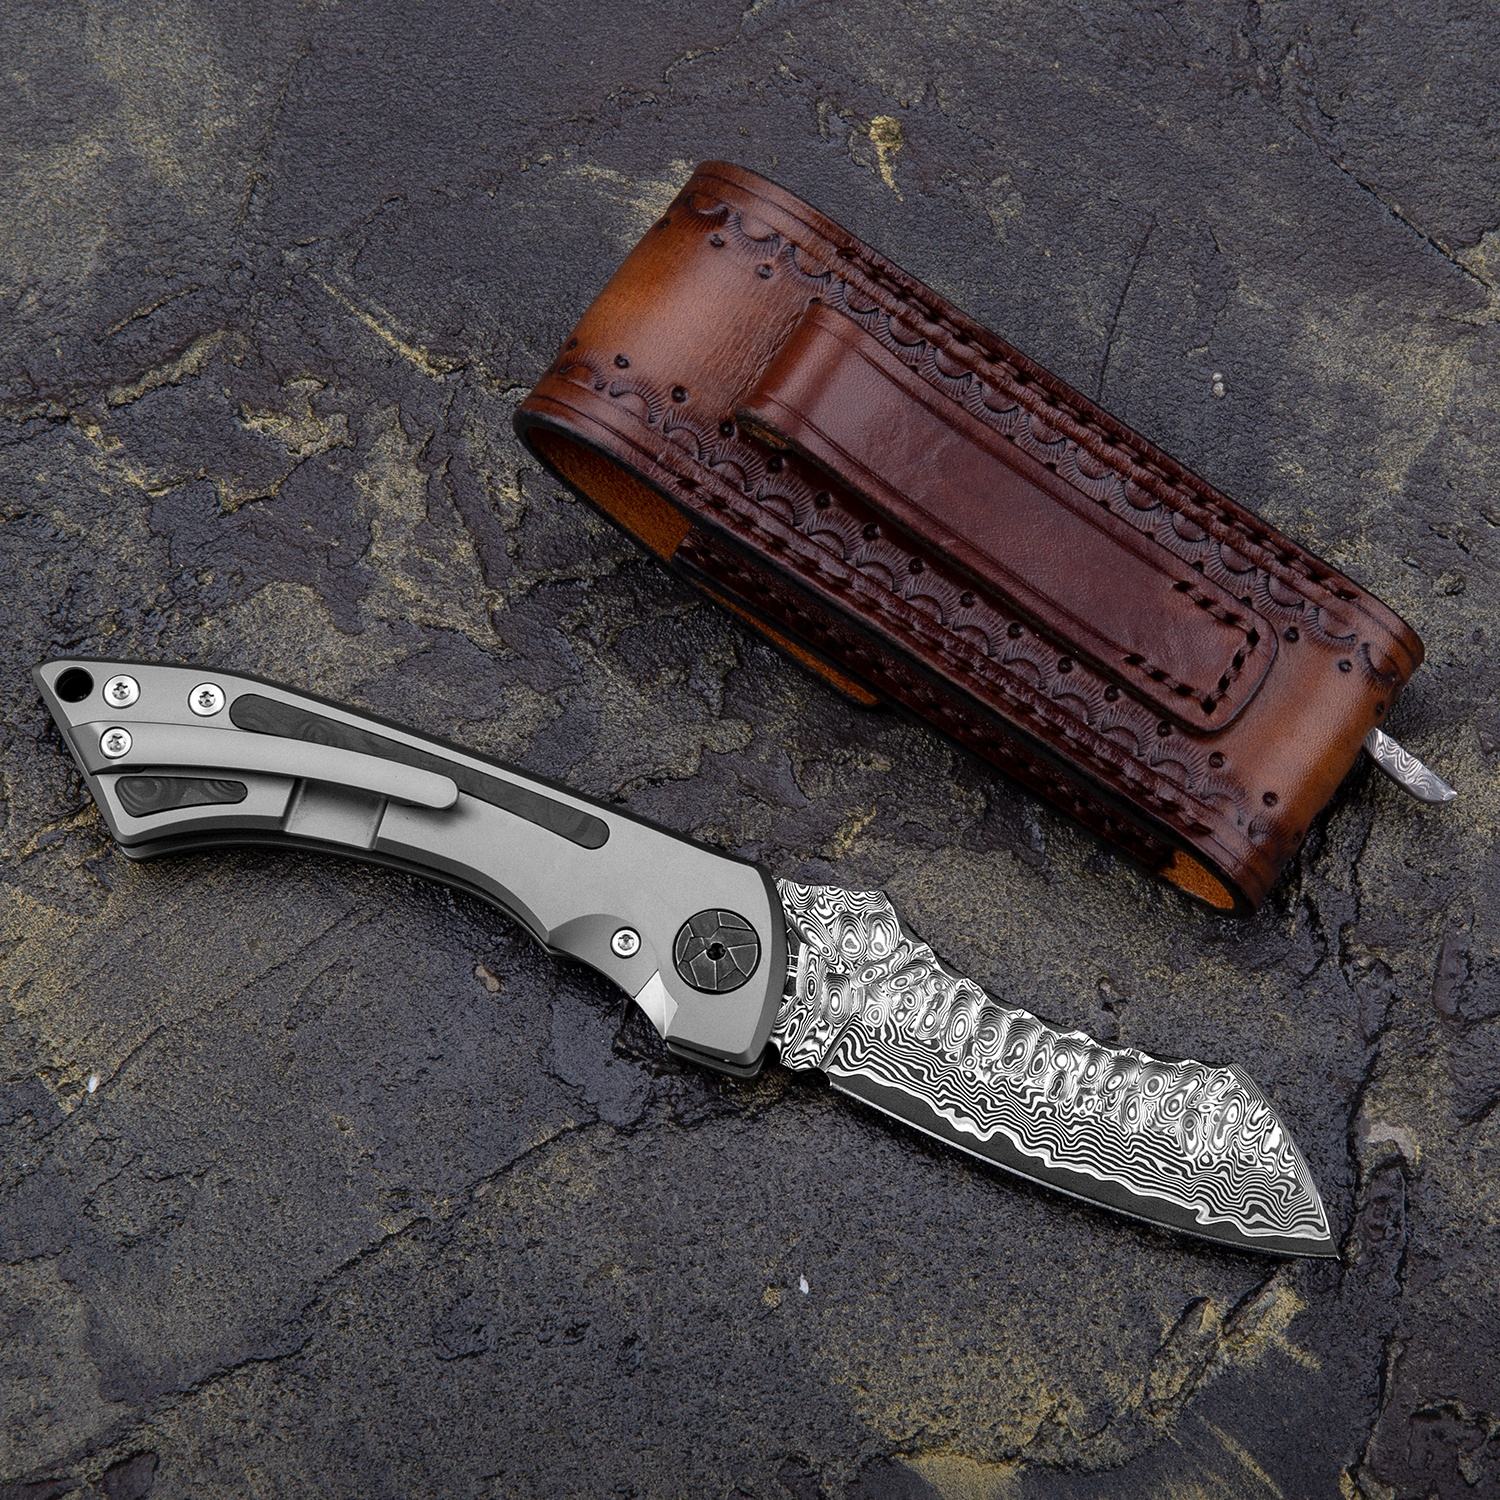 Higonokami Blade Knife | Foldable Pocket Knife | That Kitchen Label